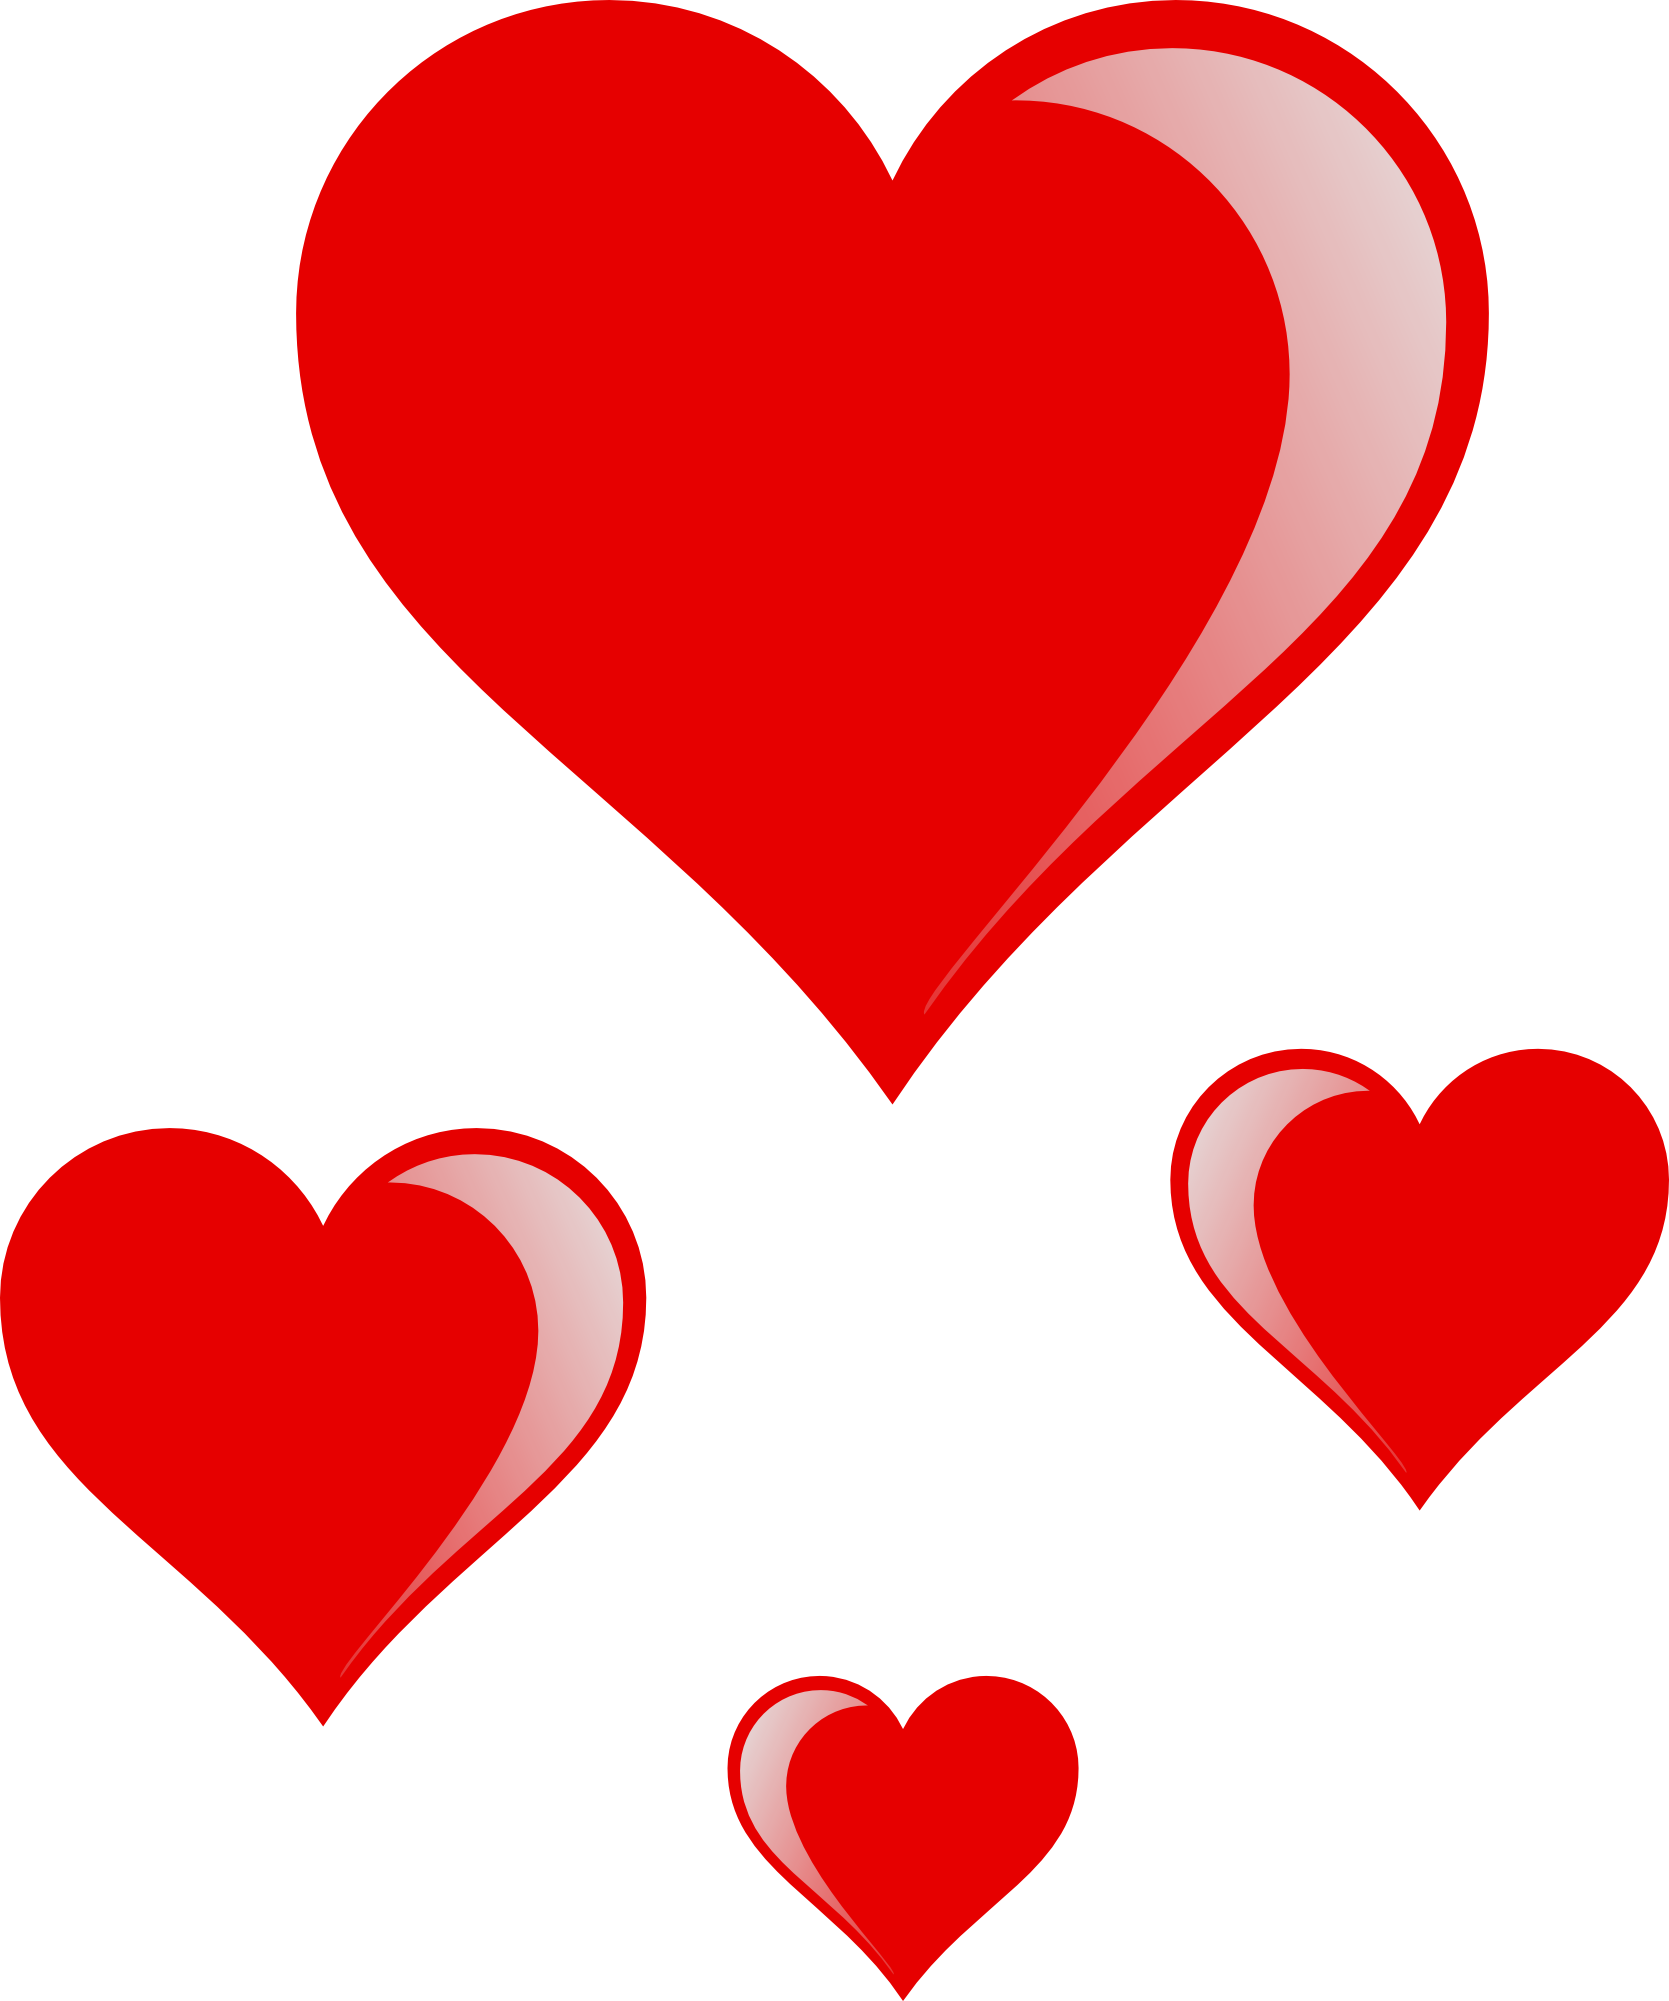 valentine clipart heart - photo #45